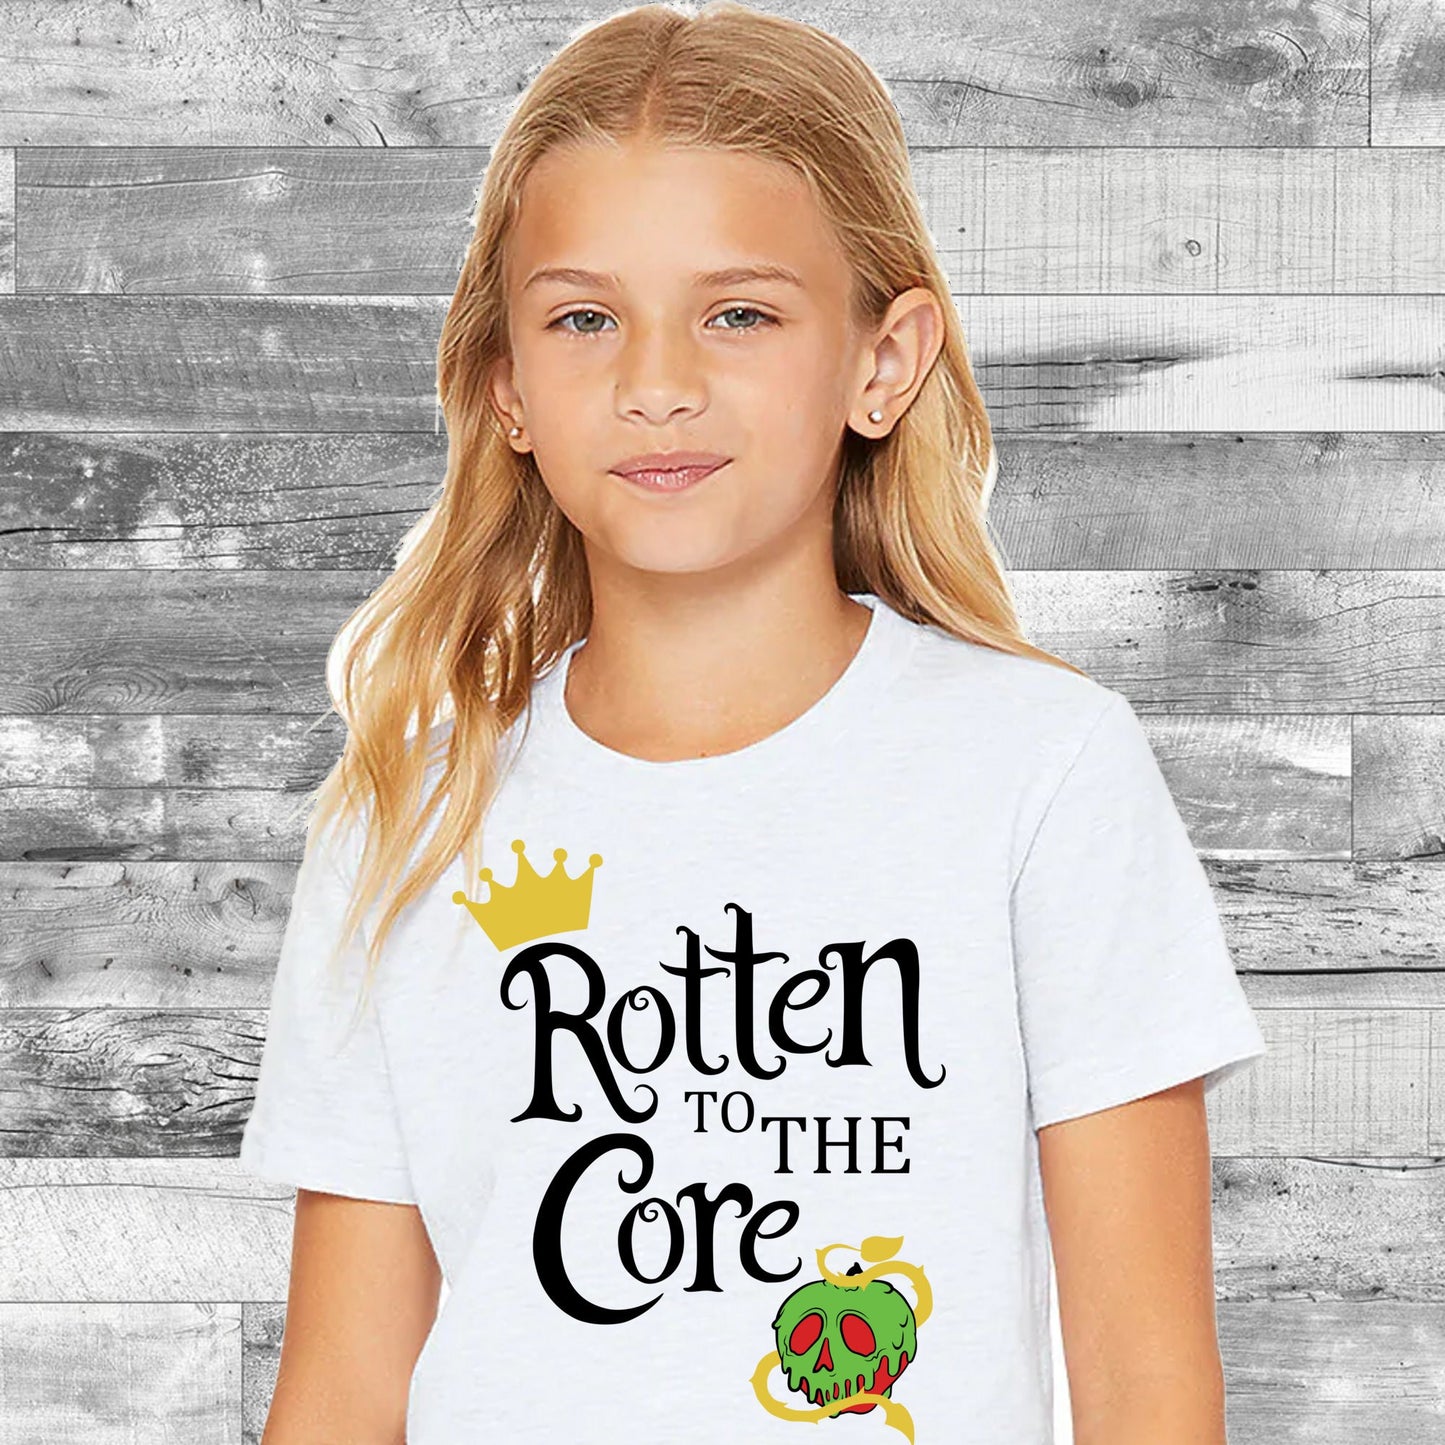 Rotten to the Core Shirt, Princess Shirt, Snow White Shirt, Evil Queen Shirt, Youth Girls Disney Shirt, Disney Trip Shirt, Vacation Shirt